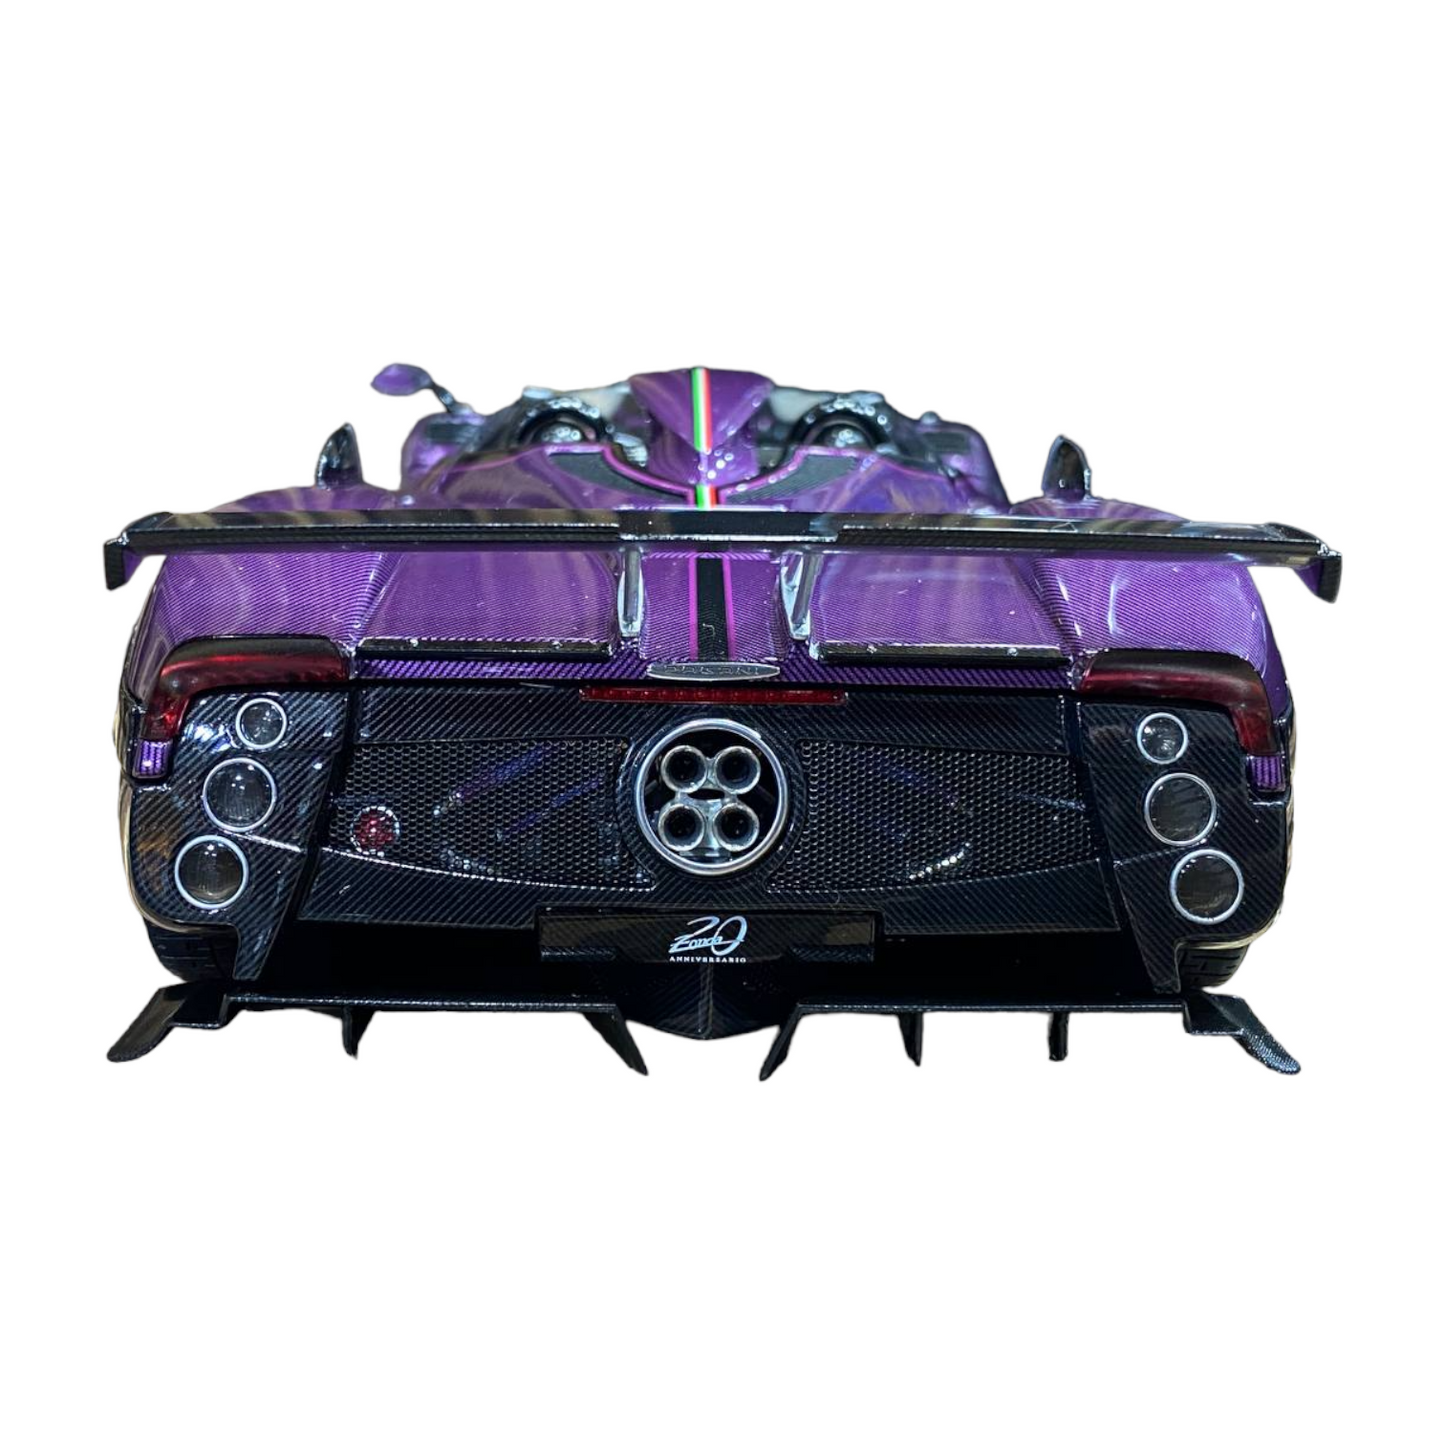 1/18 Pagani Zonda HP Barchetta Purple Carbon by LCD Model Car|Sold in Dturman.com Dubai UAE.